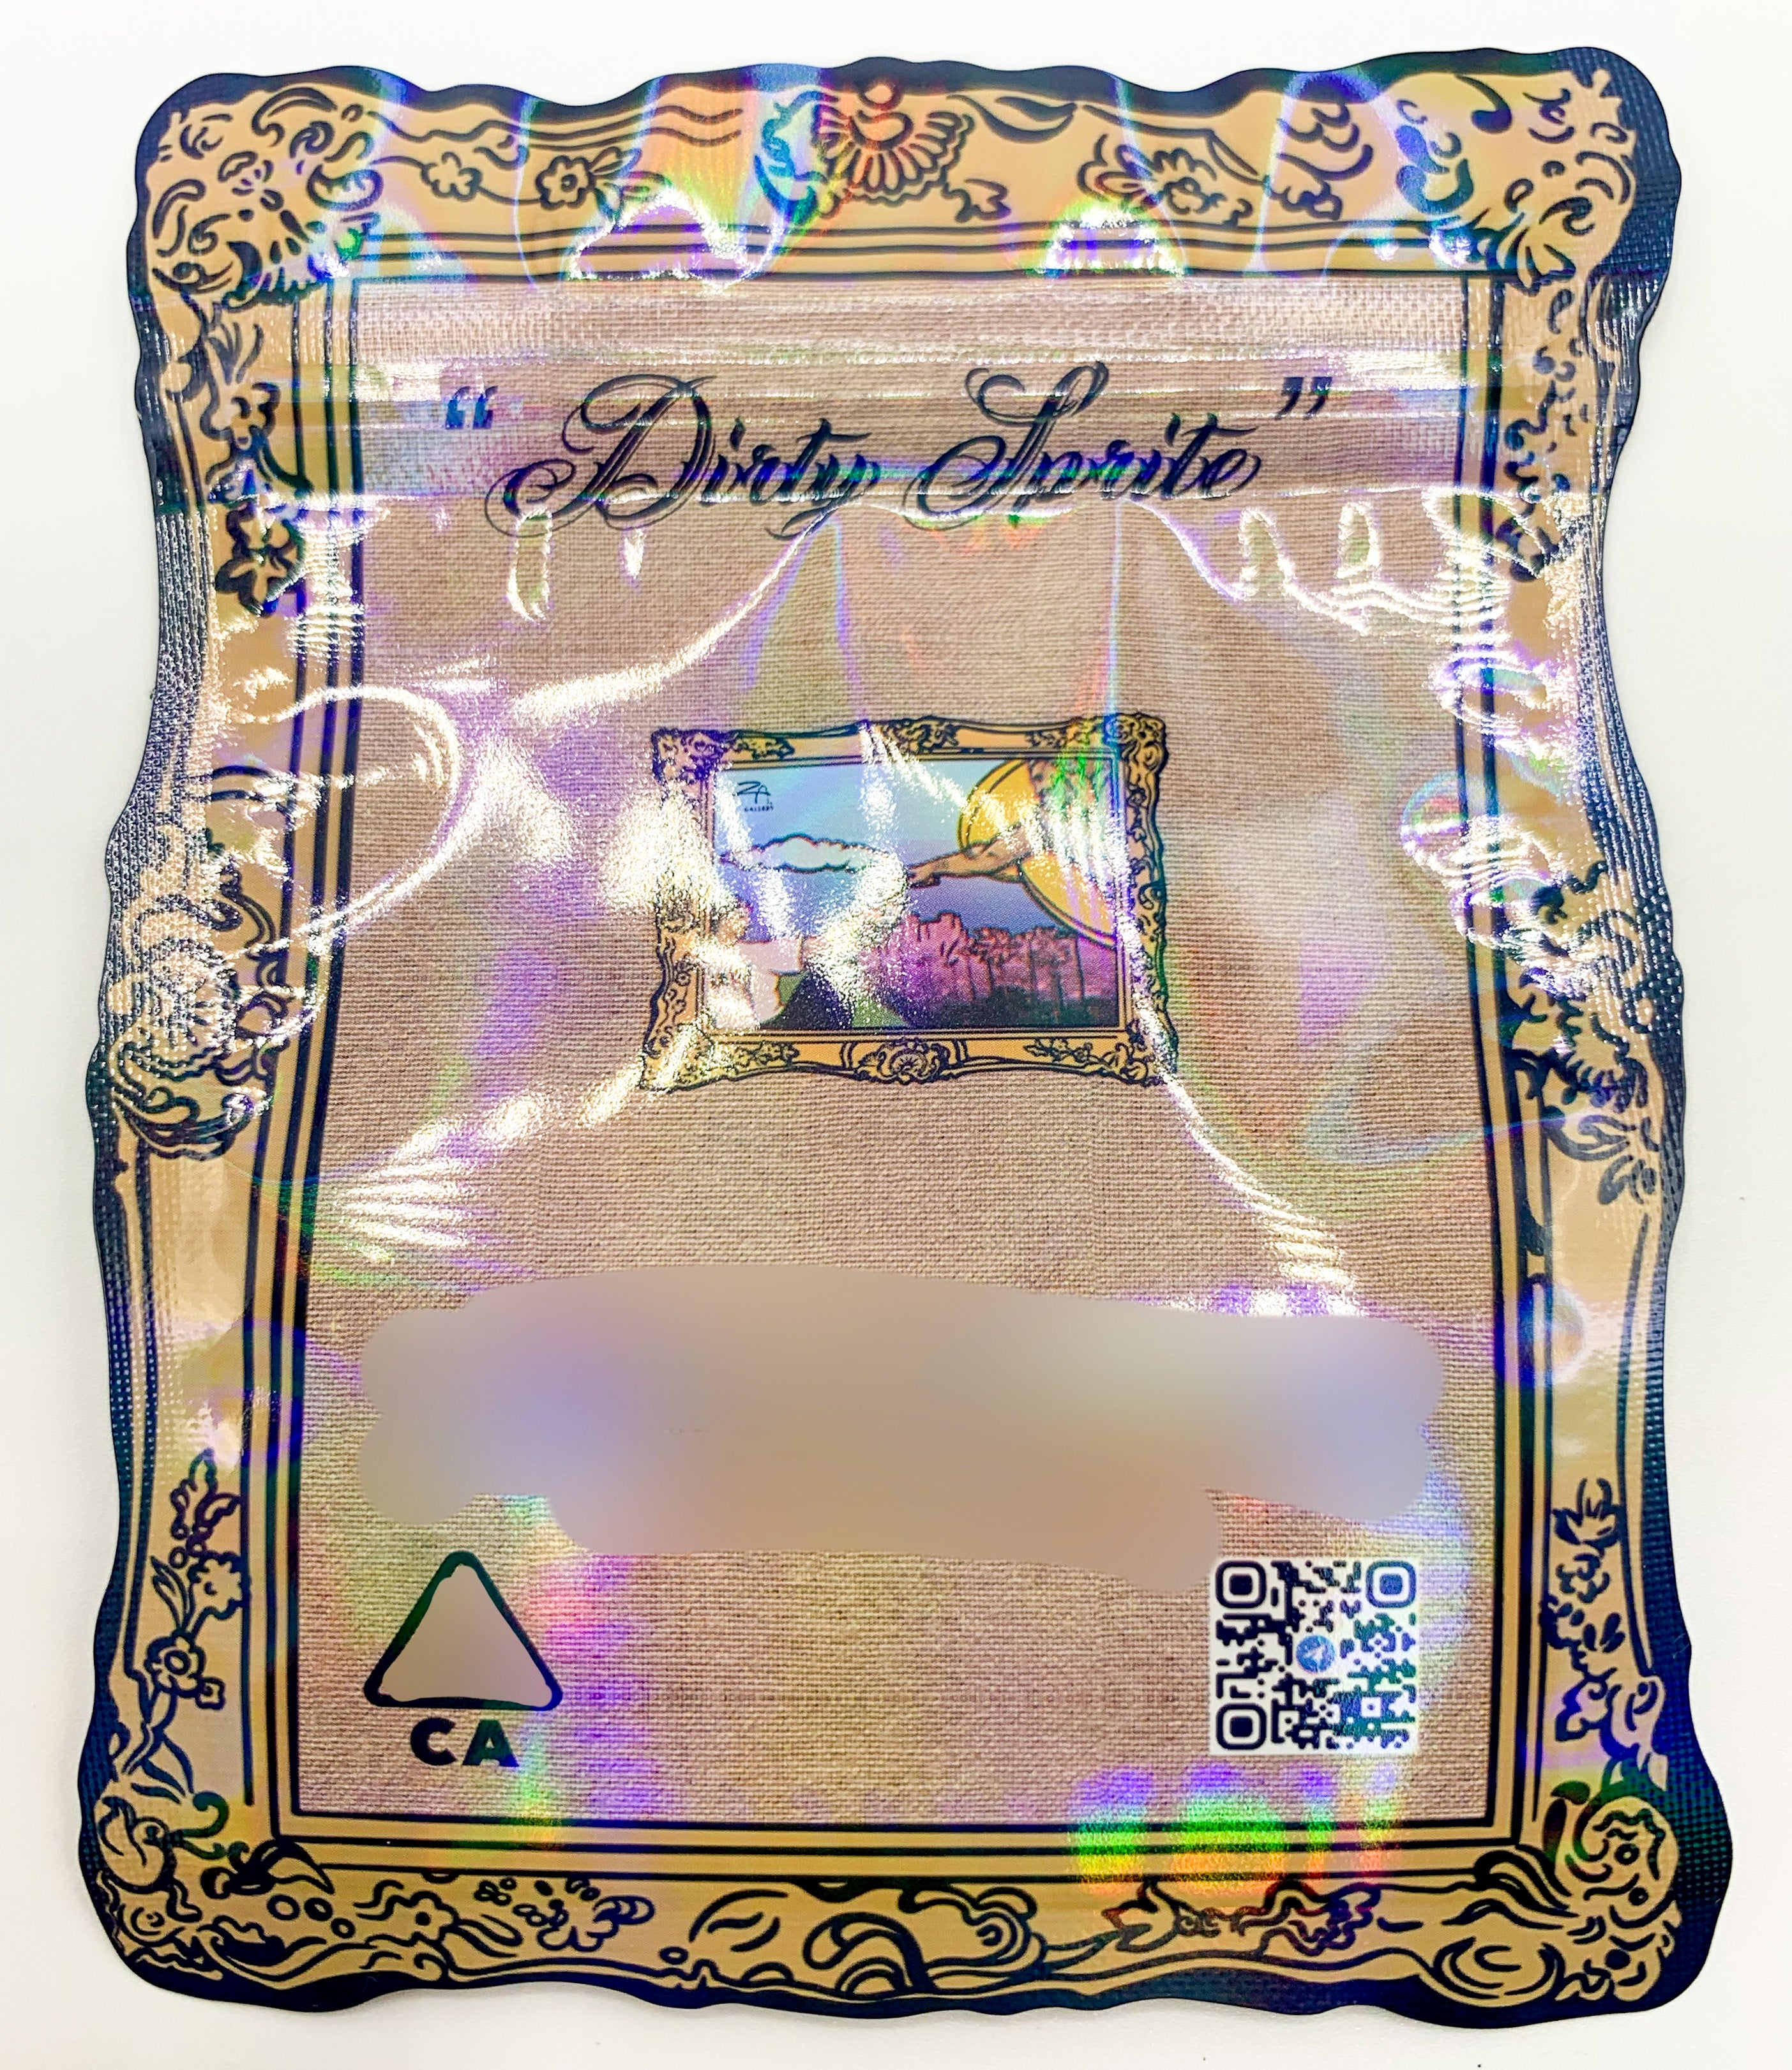 3D ZA Gallery Dirty Srite 3.5g Mylar bags